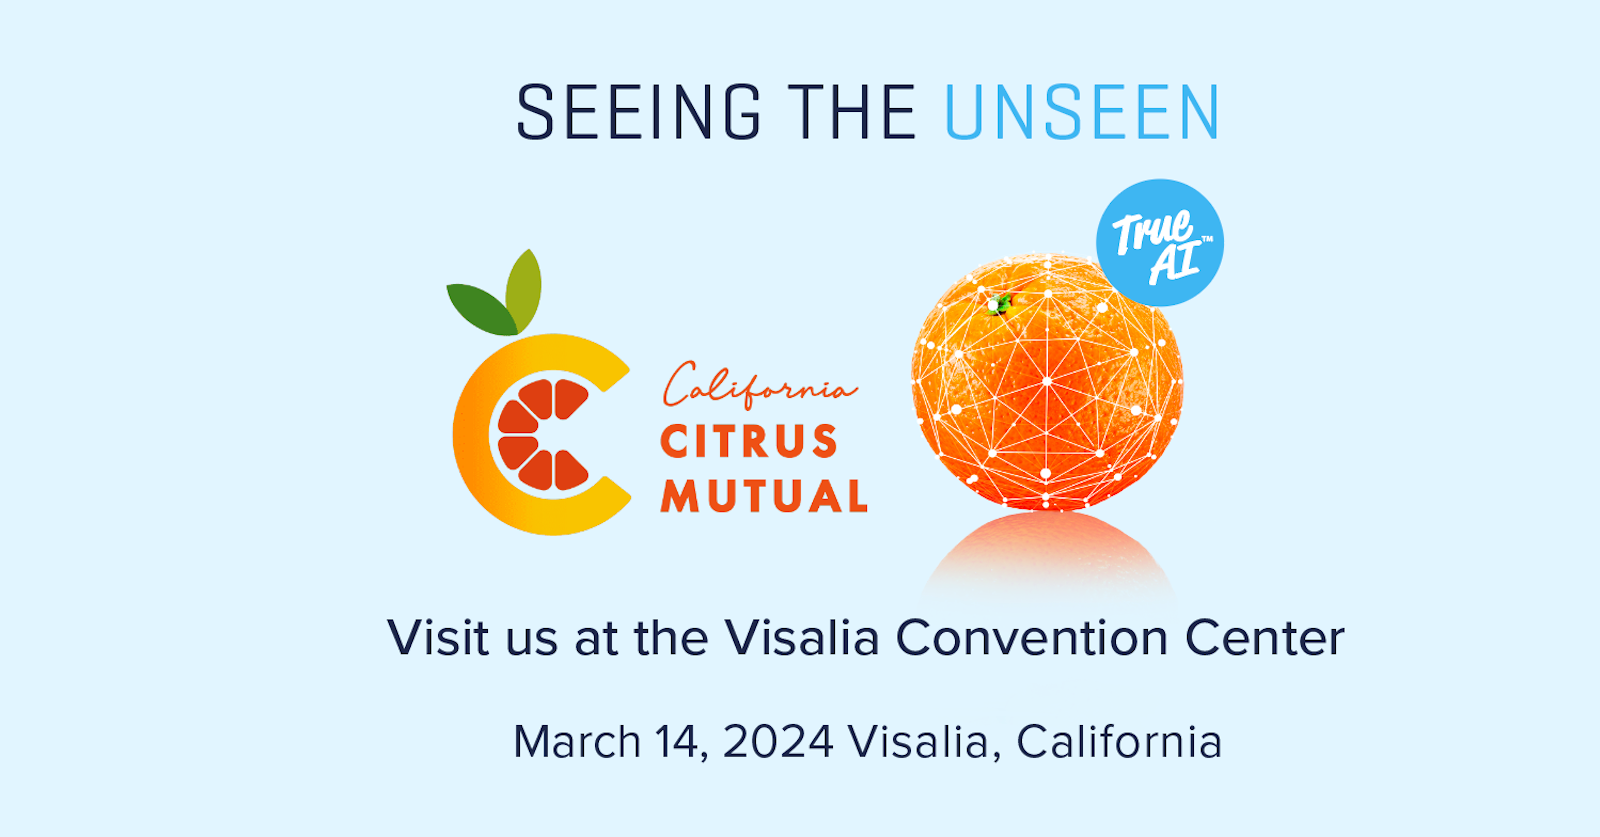 A breakthrough for Citrus with AI at California Citrus Mutual